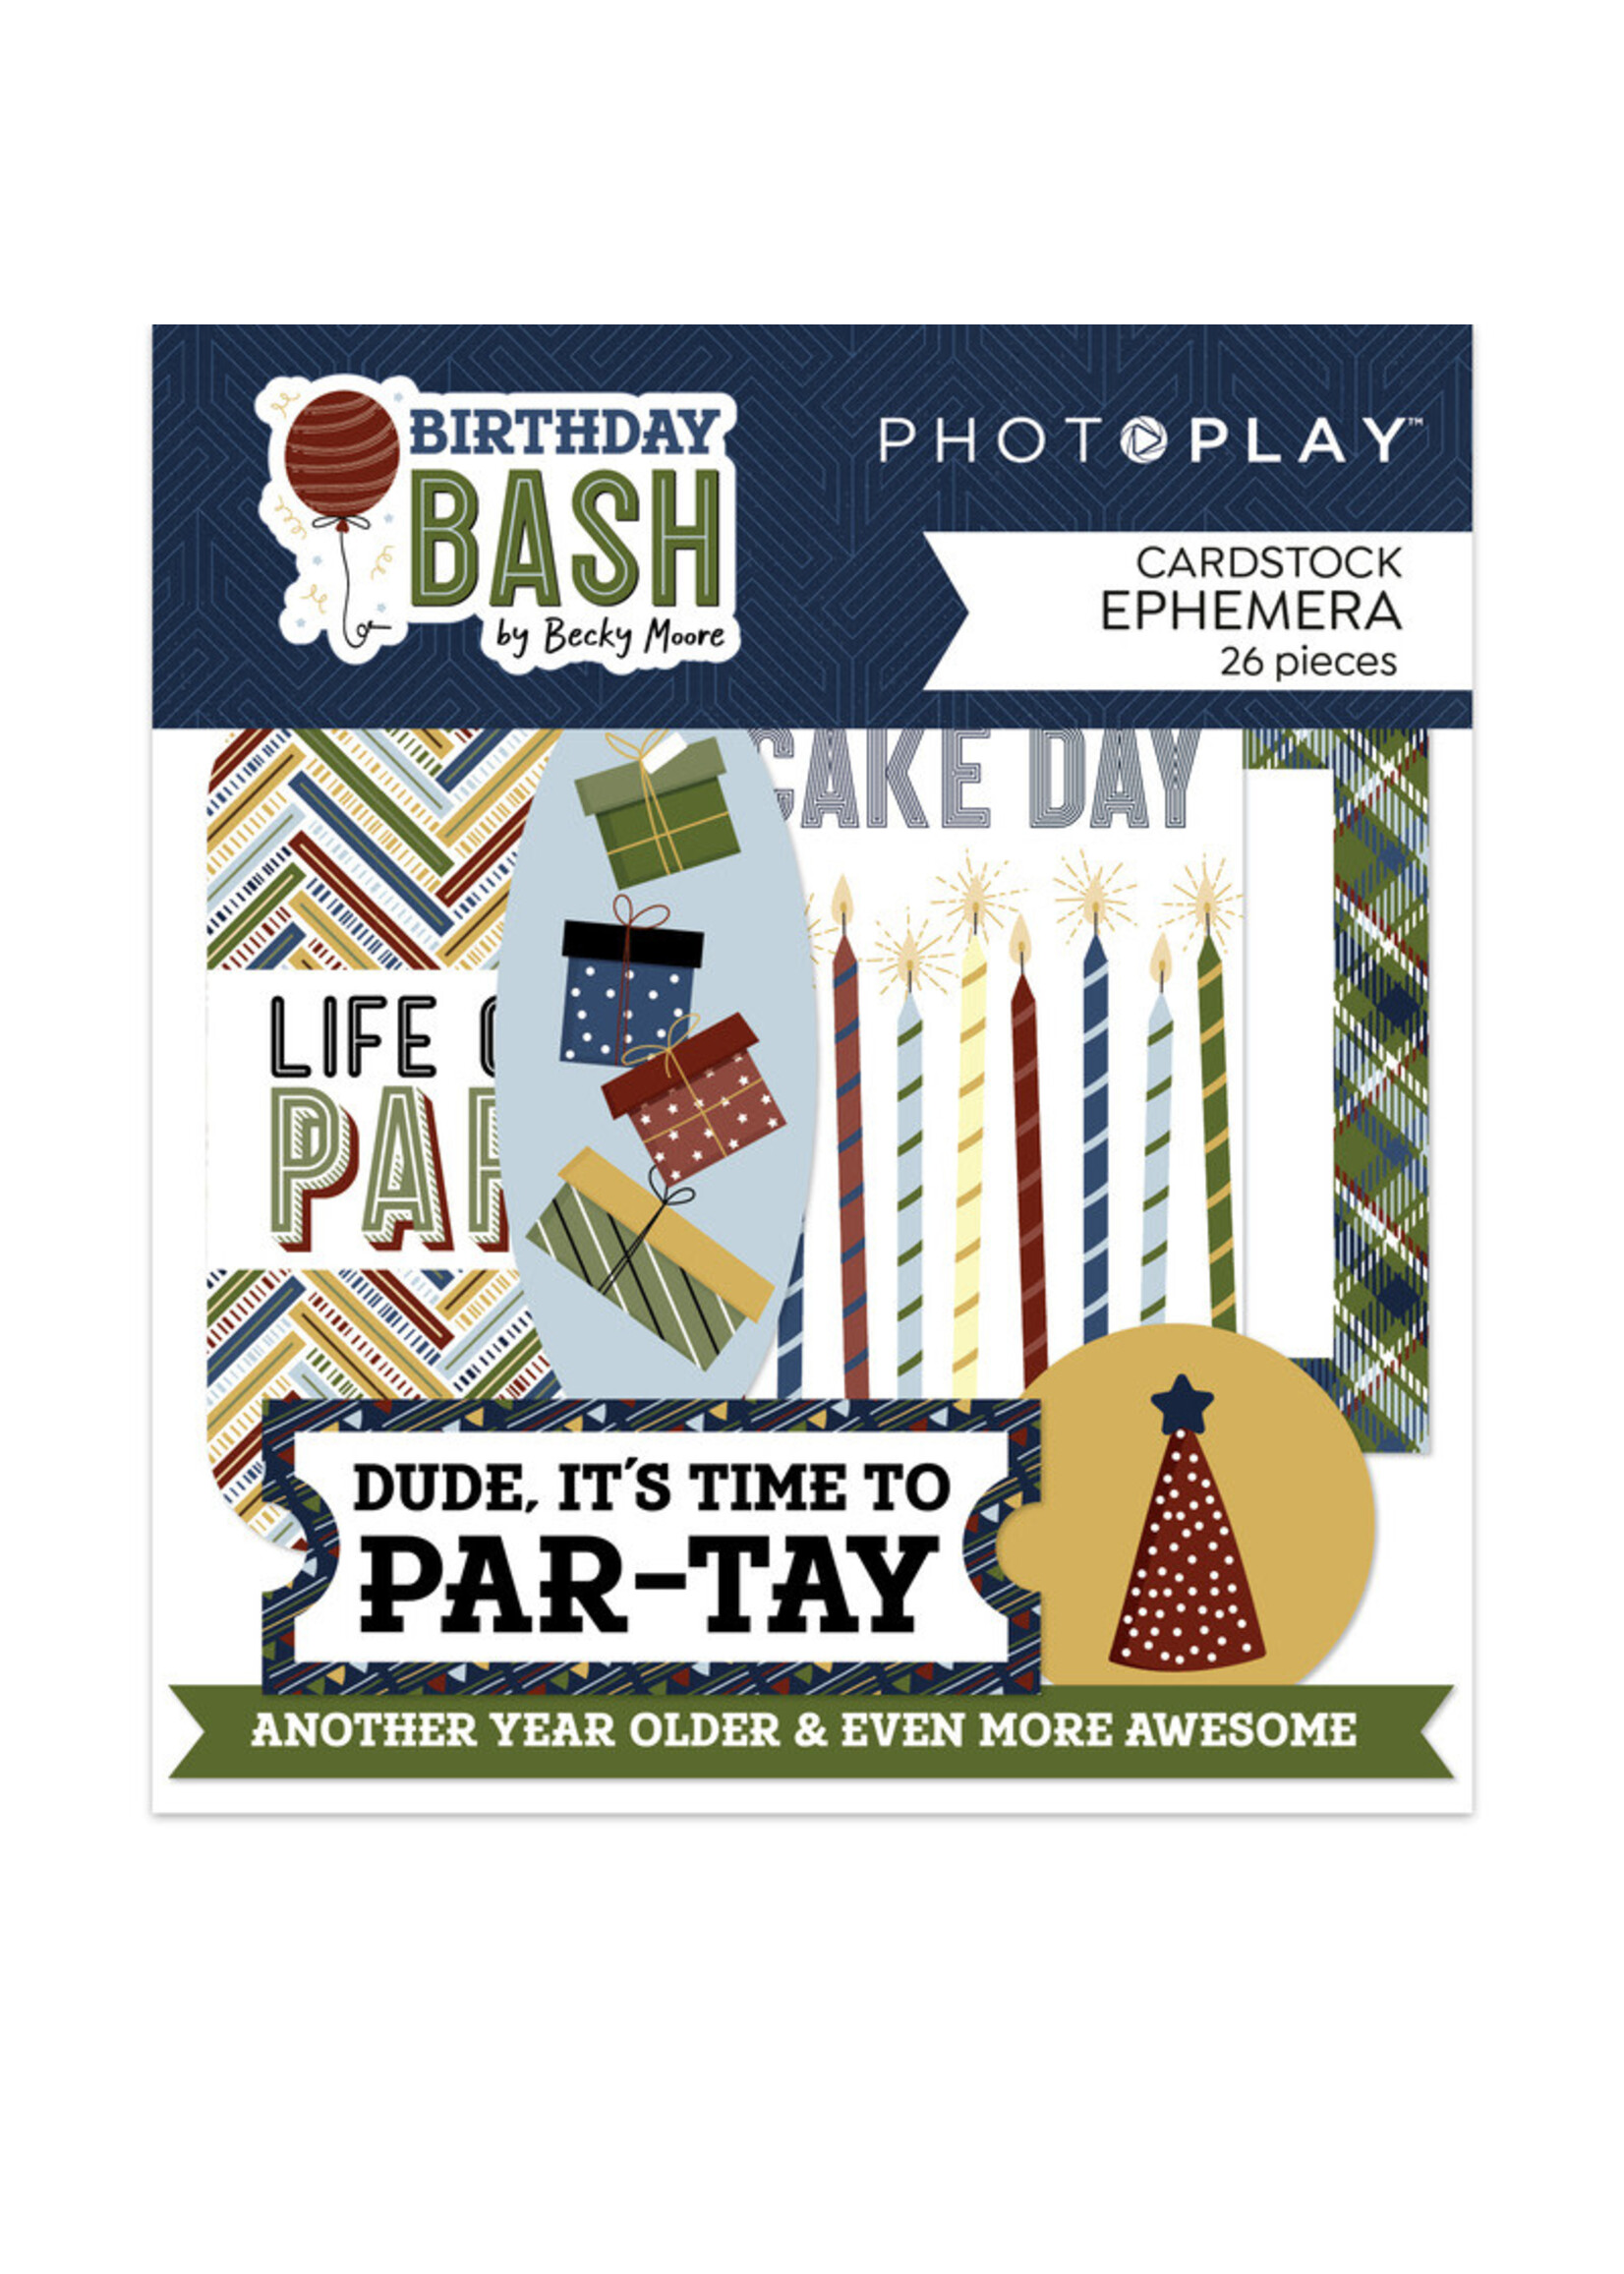 PhotoPlay Cardstock Ephemera, Birthday Bash